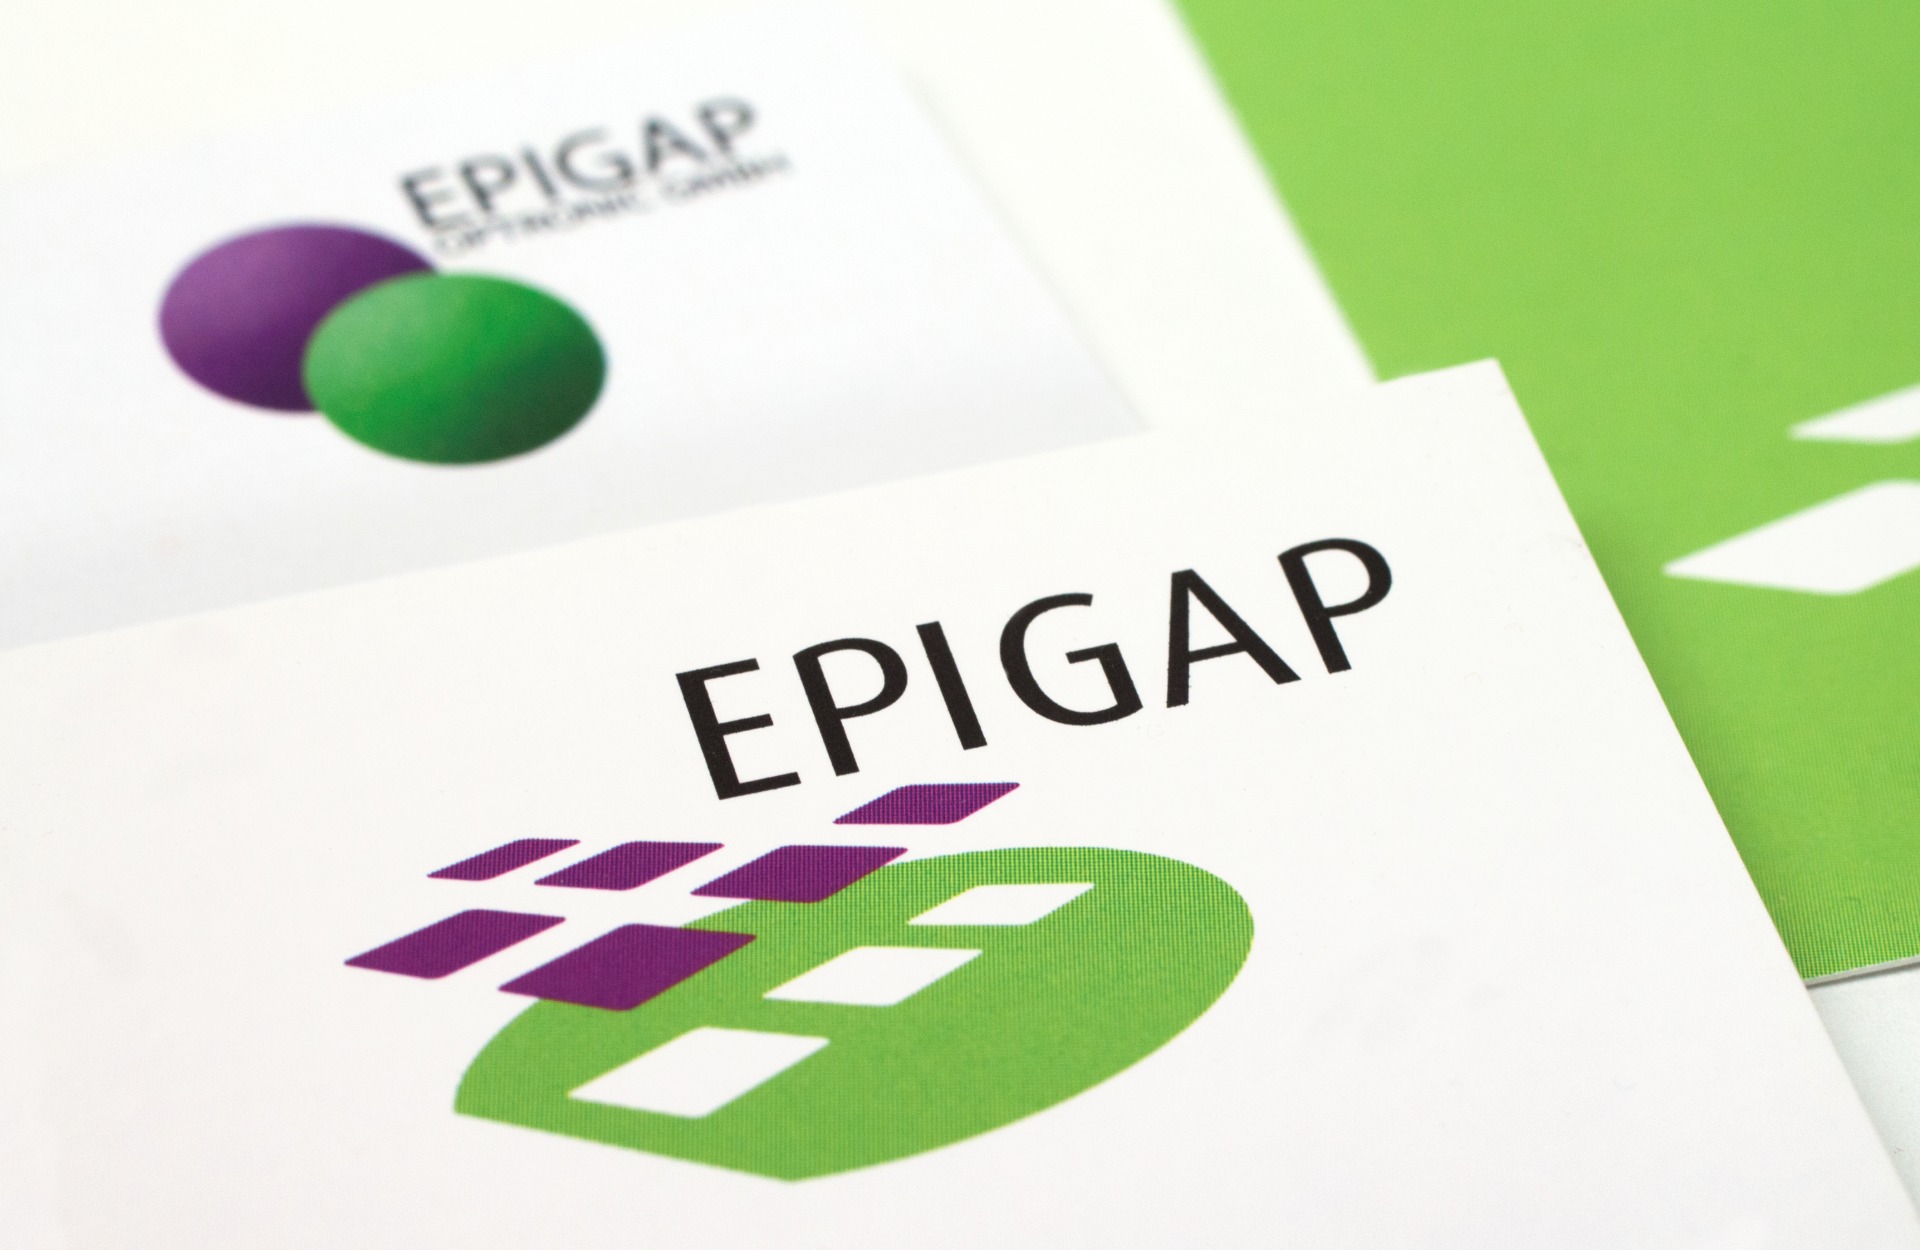 corporatedesign-epigap-logo-copyright-typoly